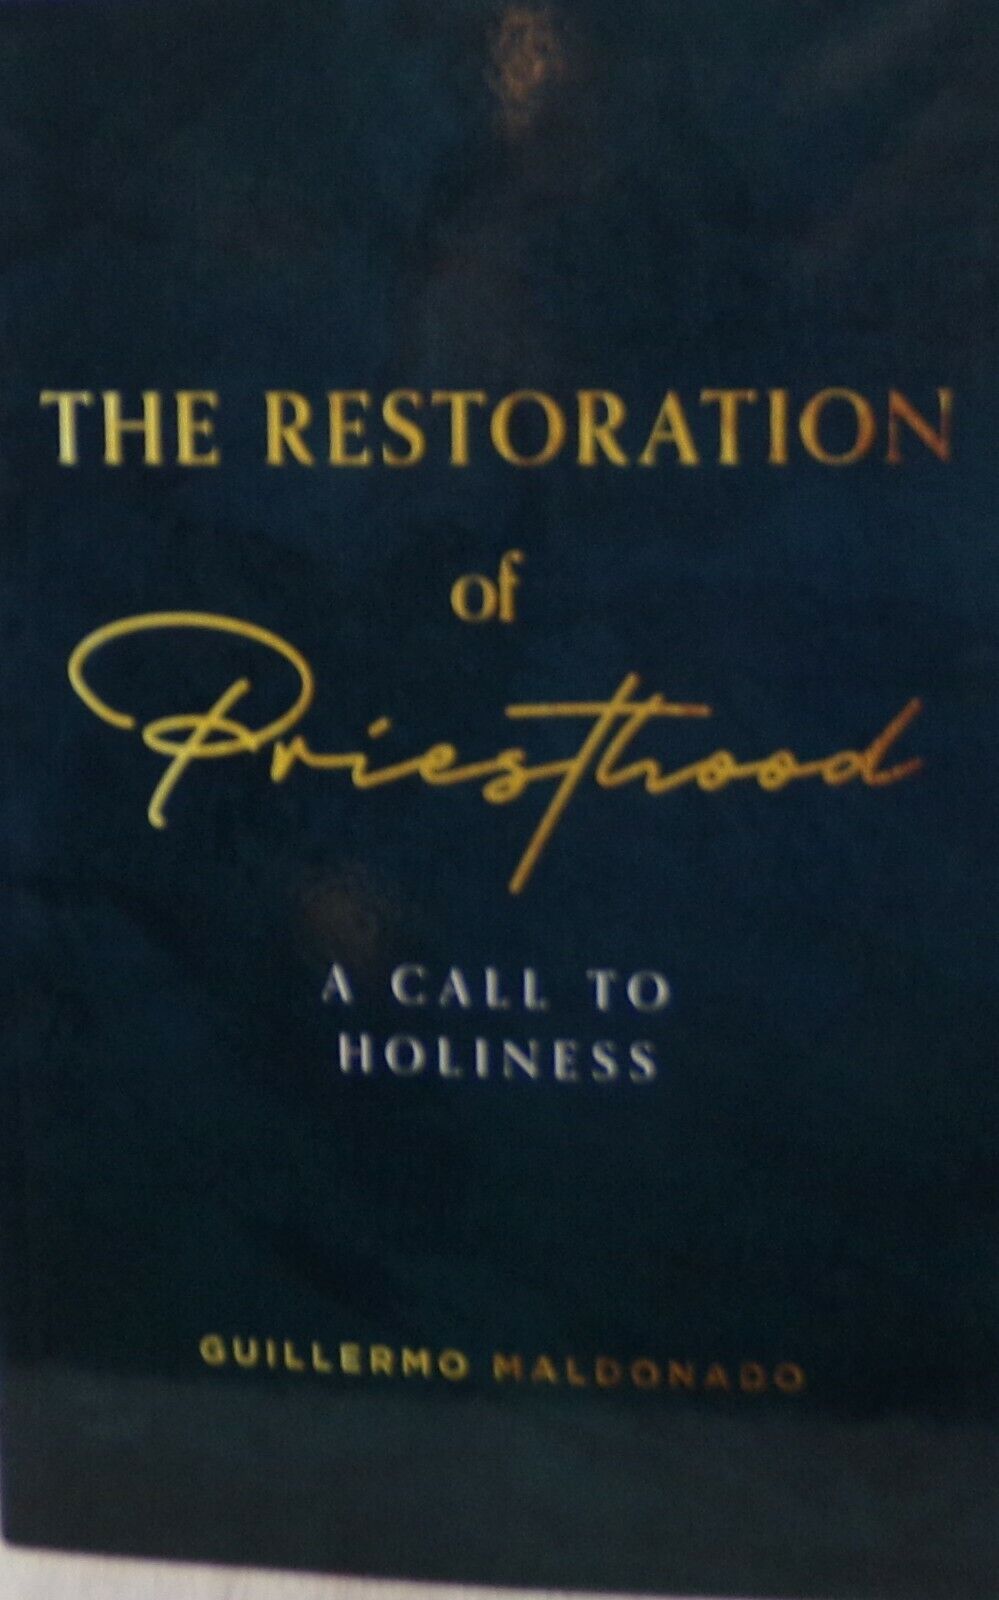 The Restoration of The Priesthood: A Call to Holiness By G. Maldonado *SKU3-2*